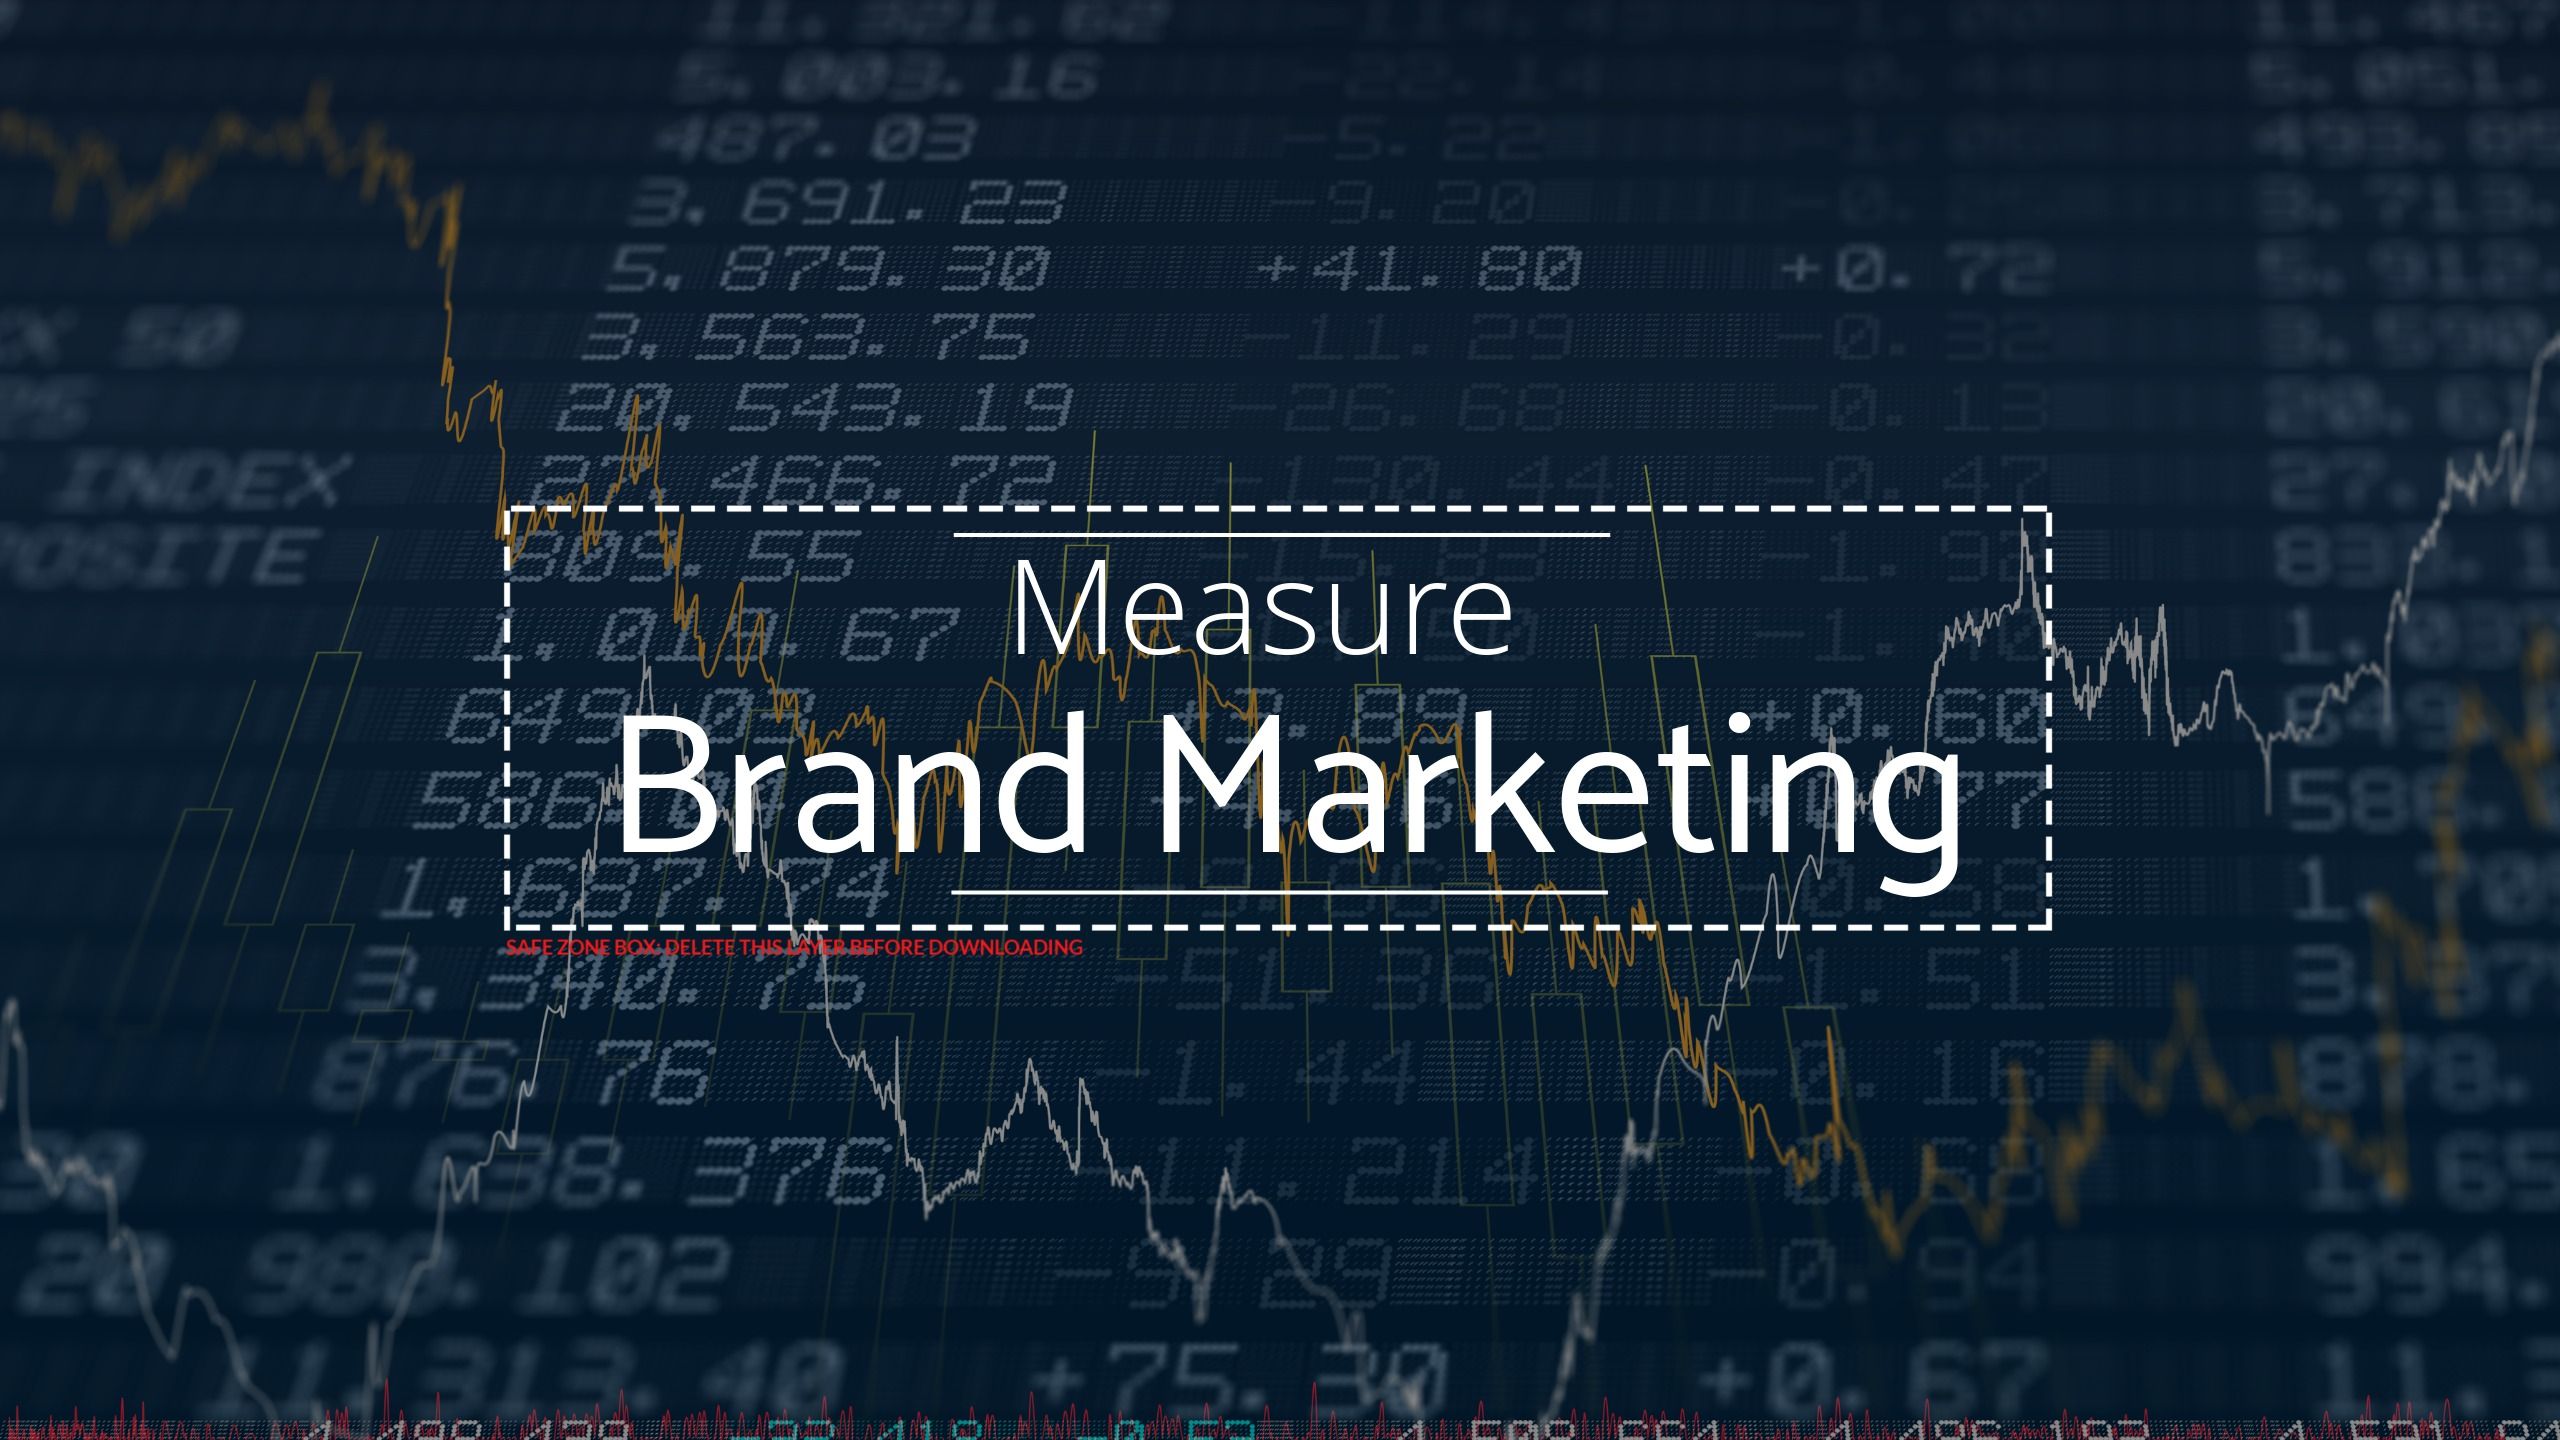 Graphs, statistics and 'Measure brand marketing' as a title - Measure brand marketing using detailed analytics - Image